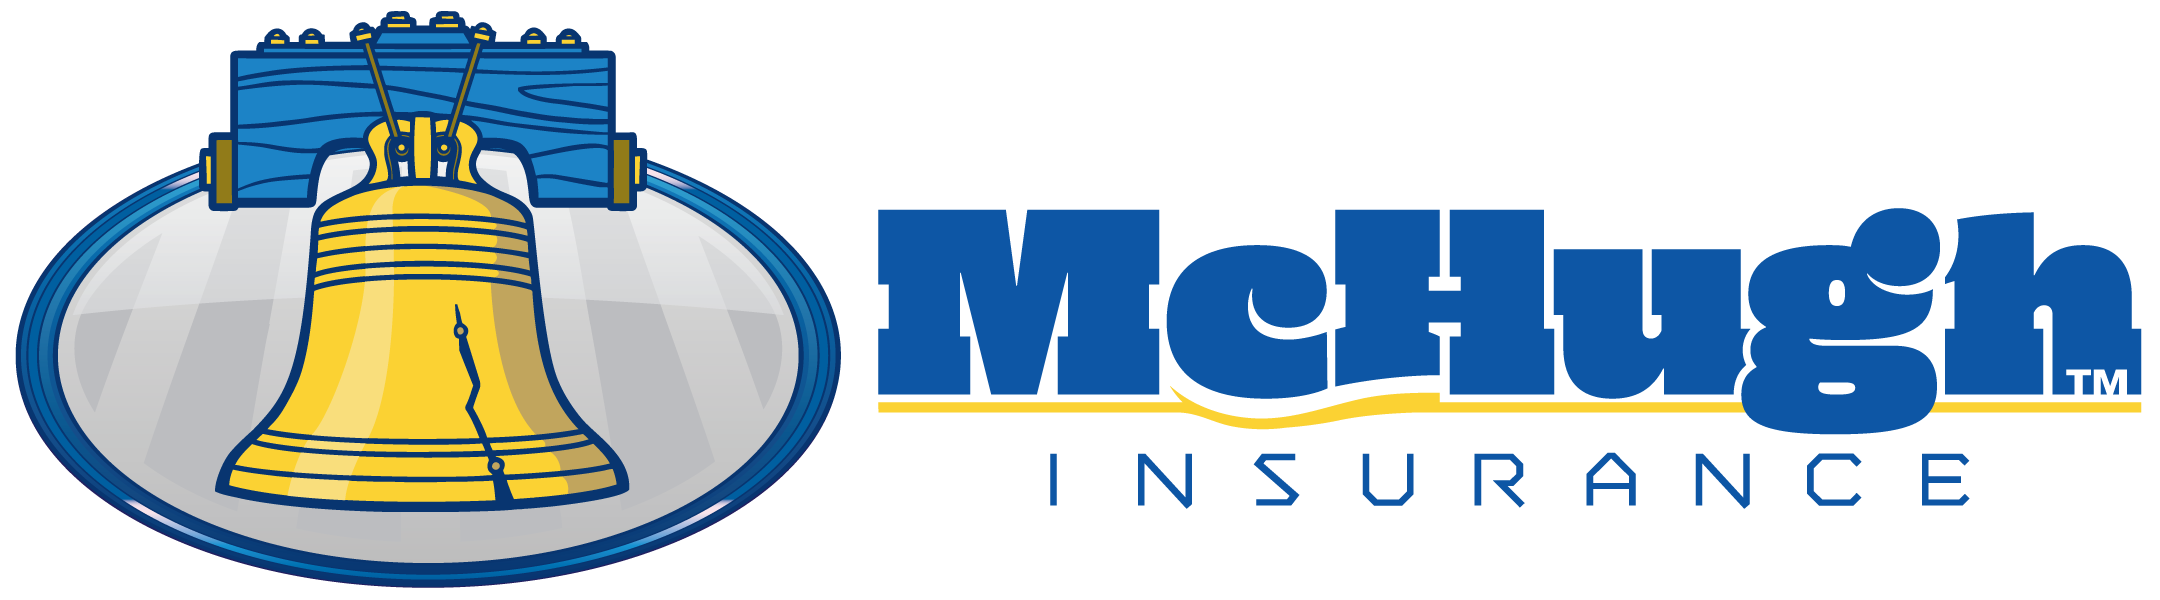 McHugh Insurance